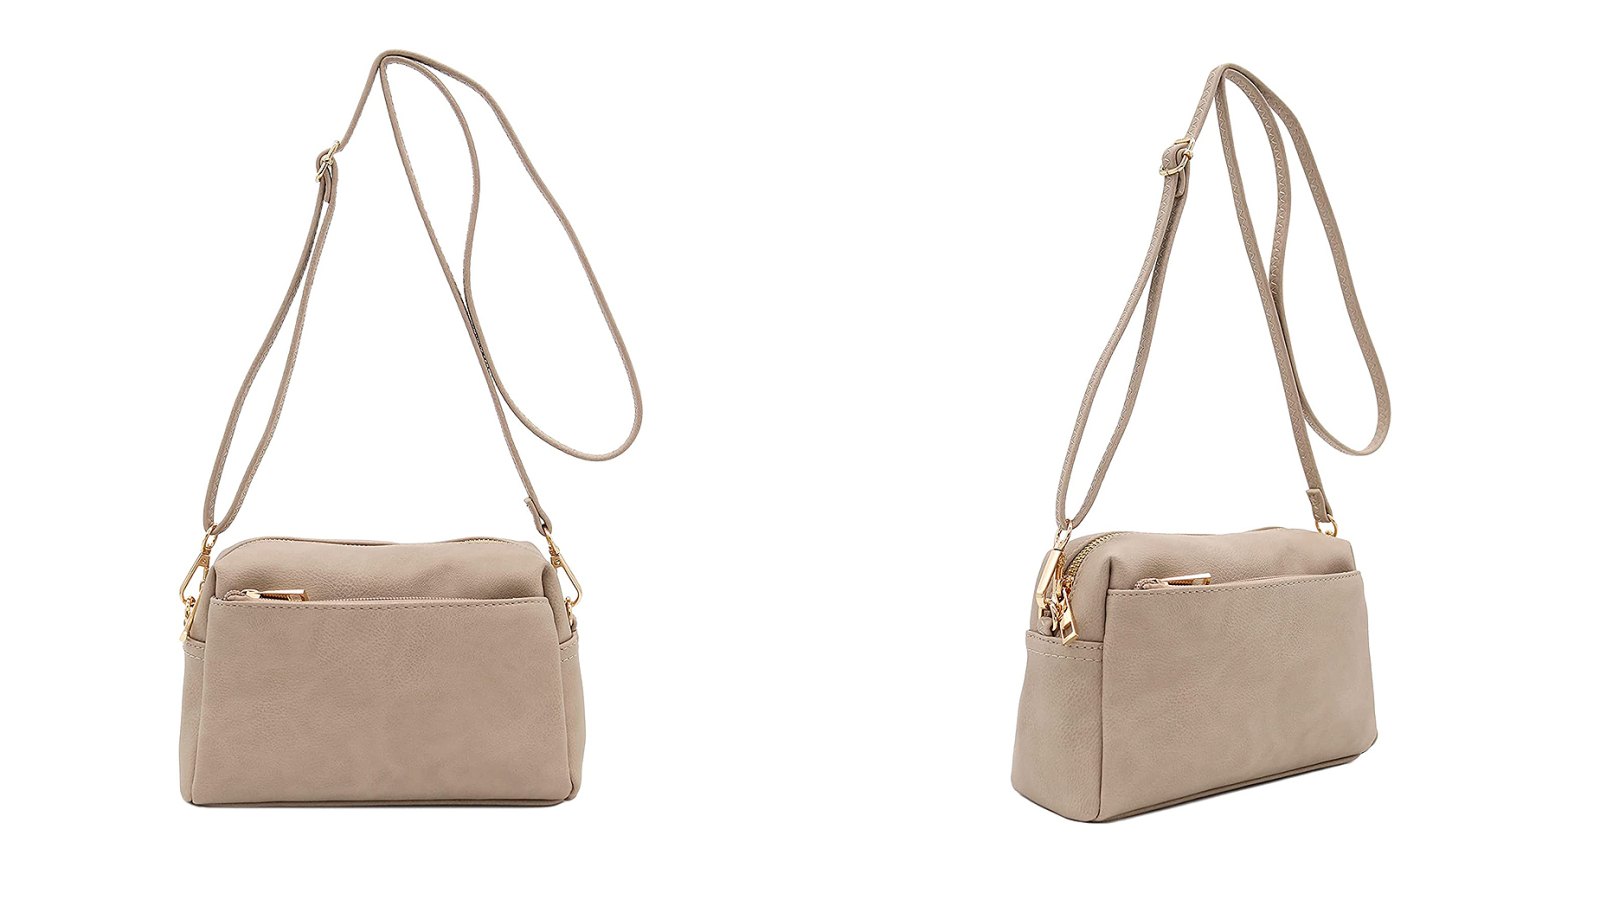 Herald Triple Zip Small Crossbody Bag for Women, Square Snapshot Camera  Side Shoulder Purse Handbag with Wide Strap